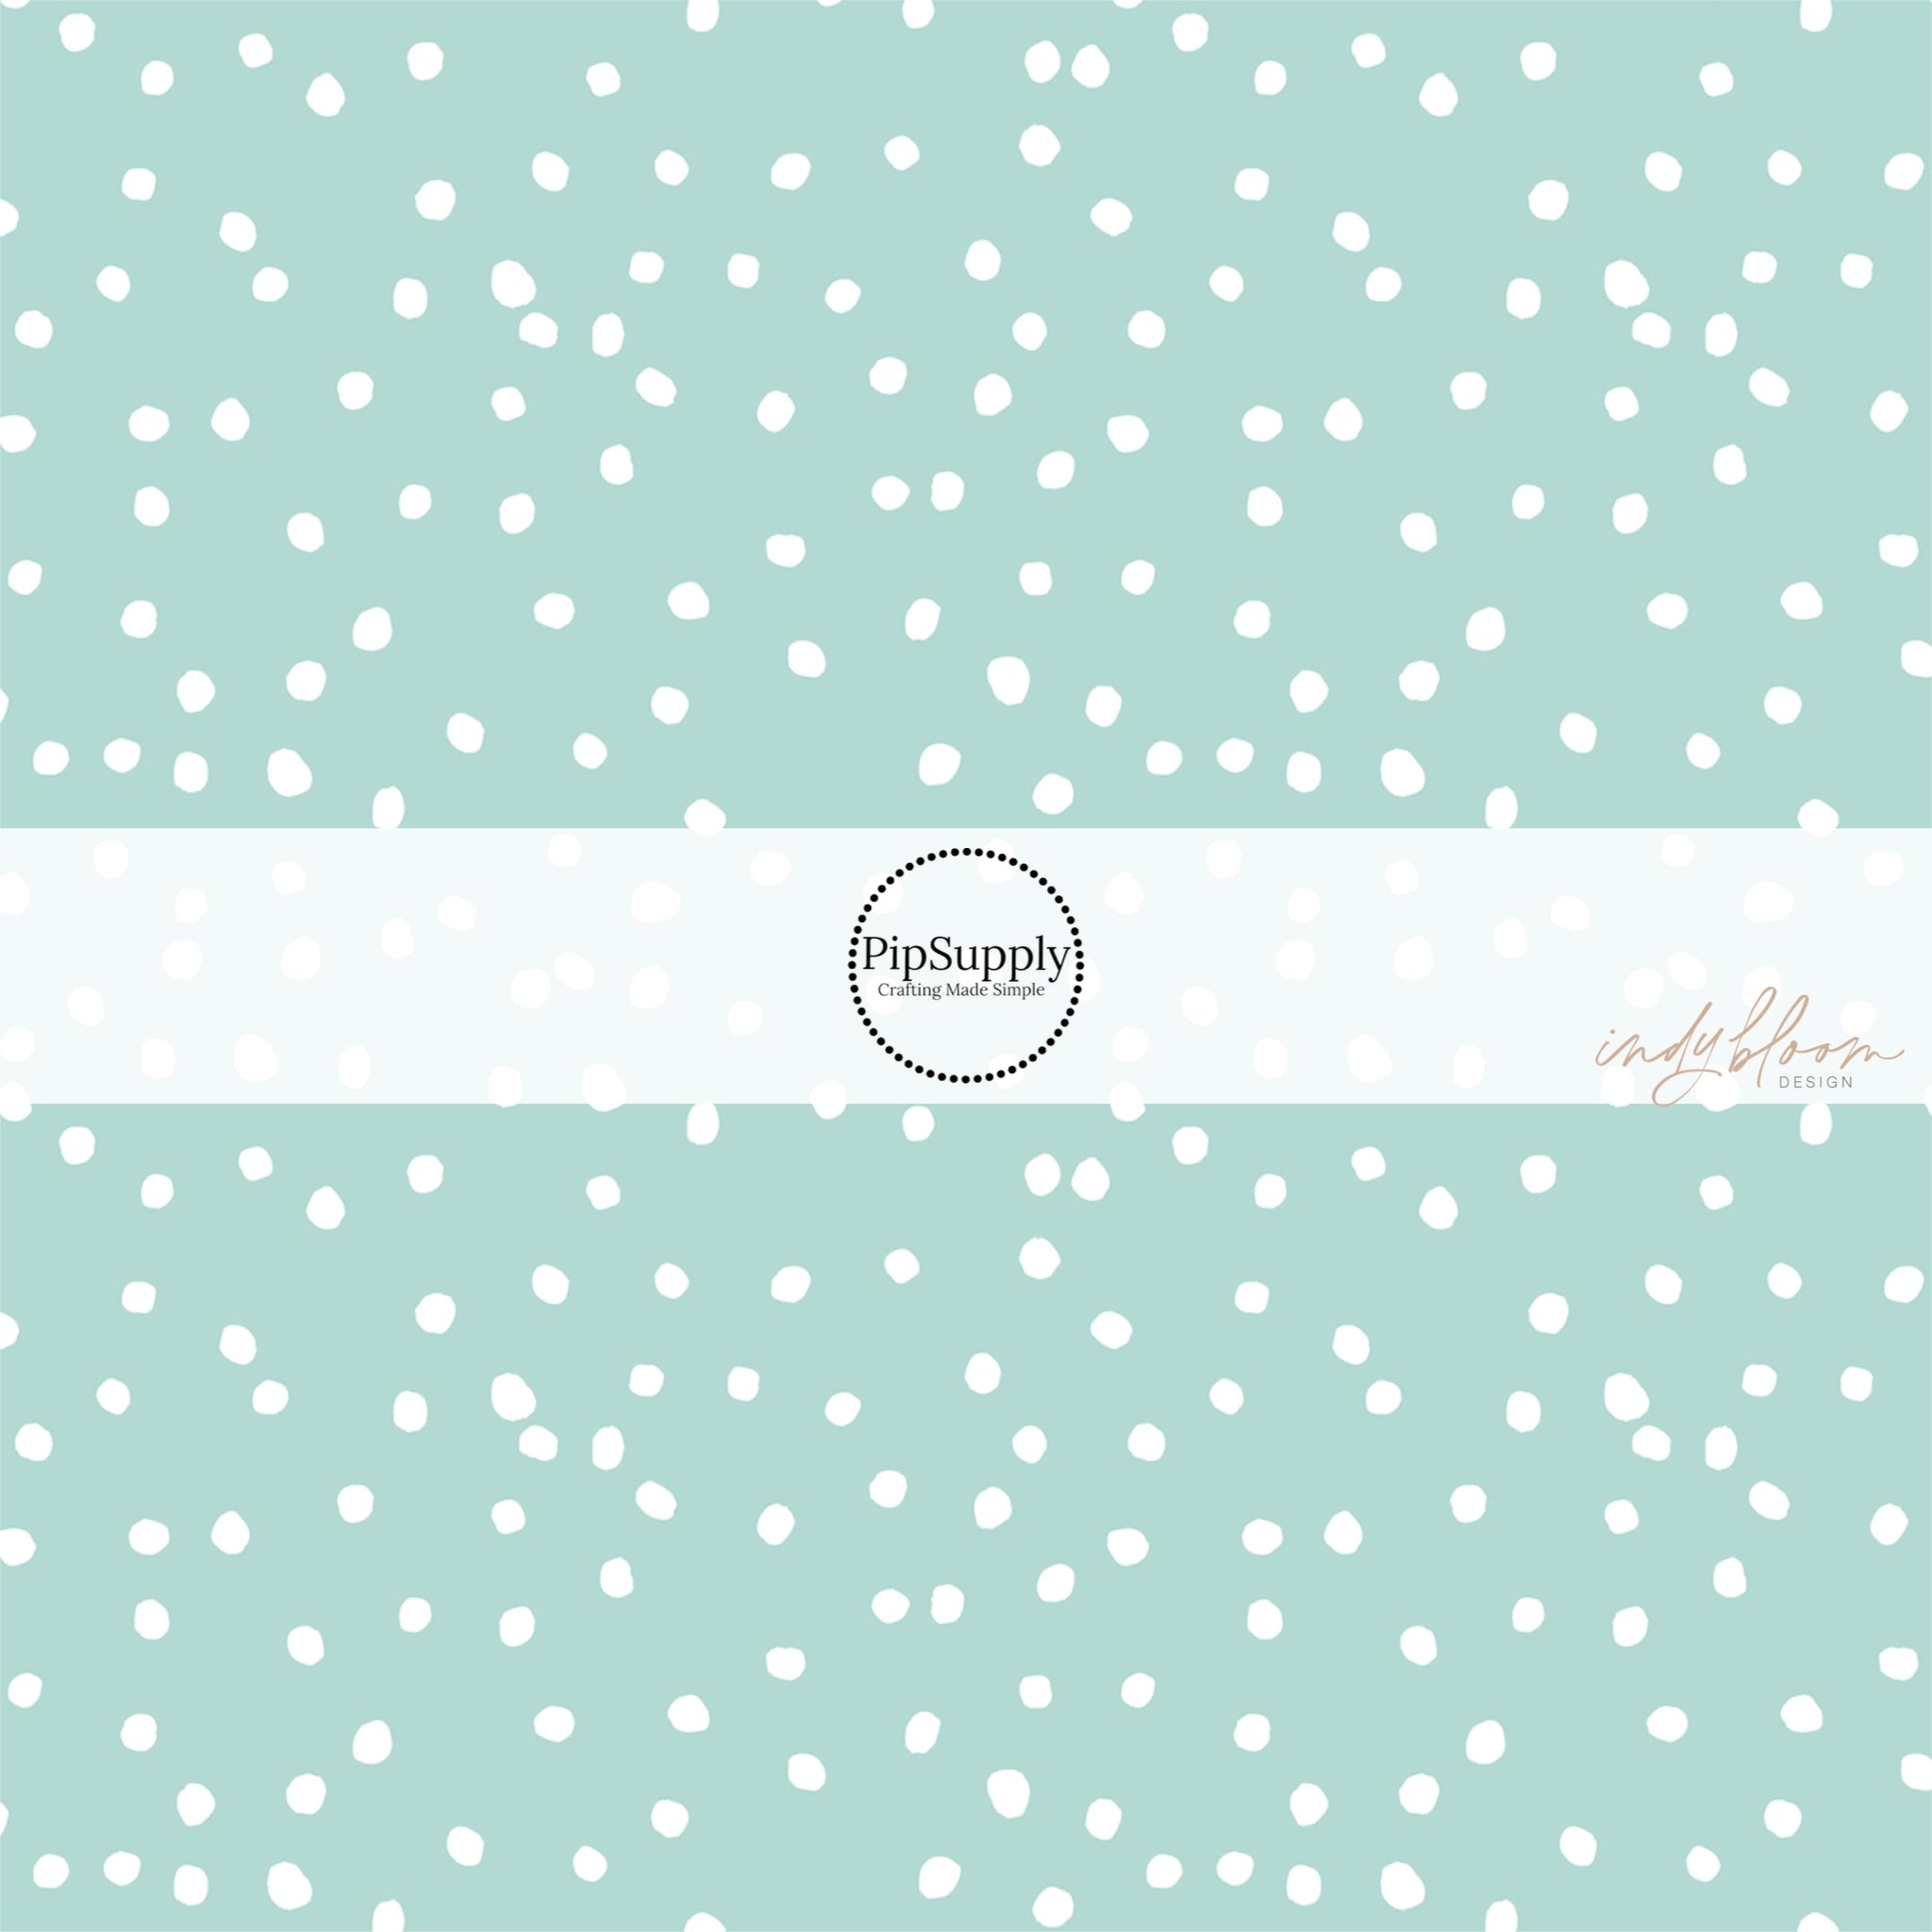 teal and white polka dot background